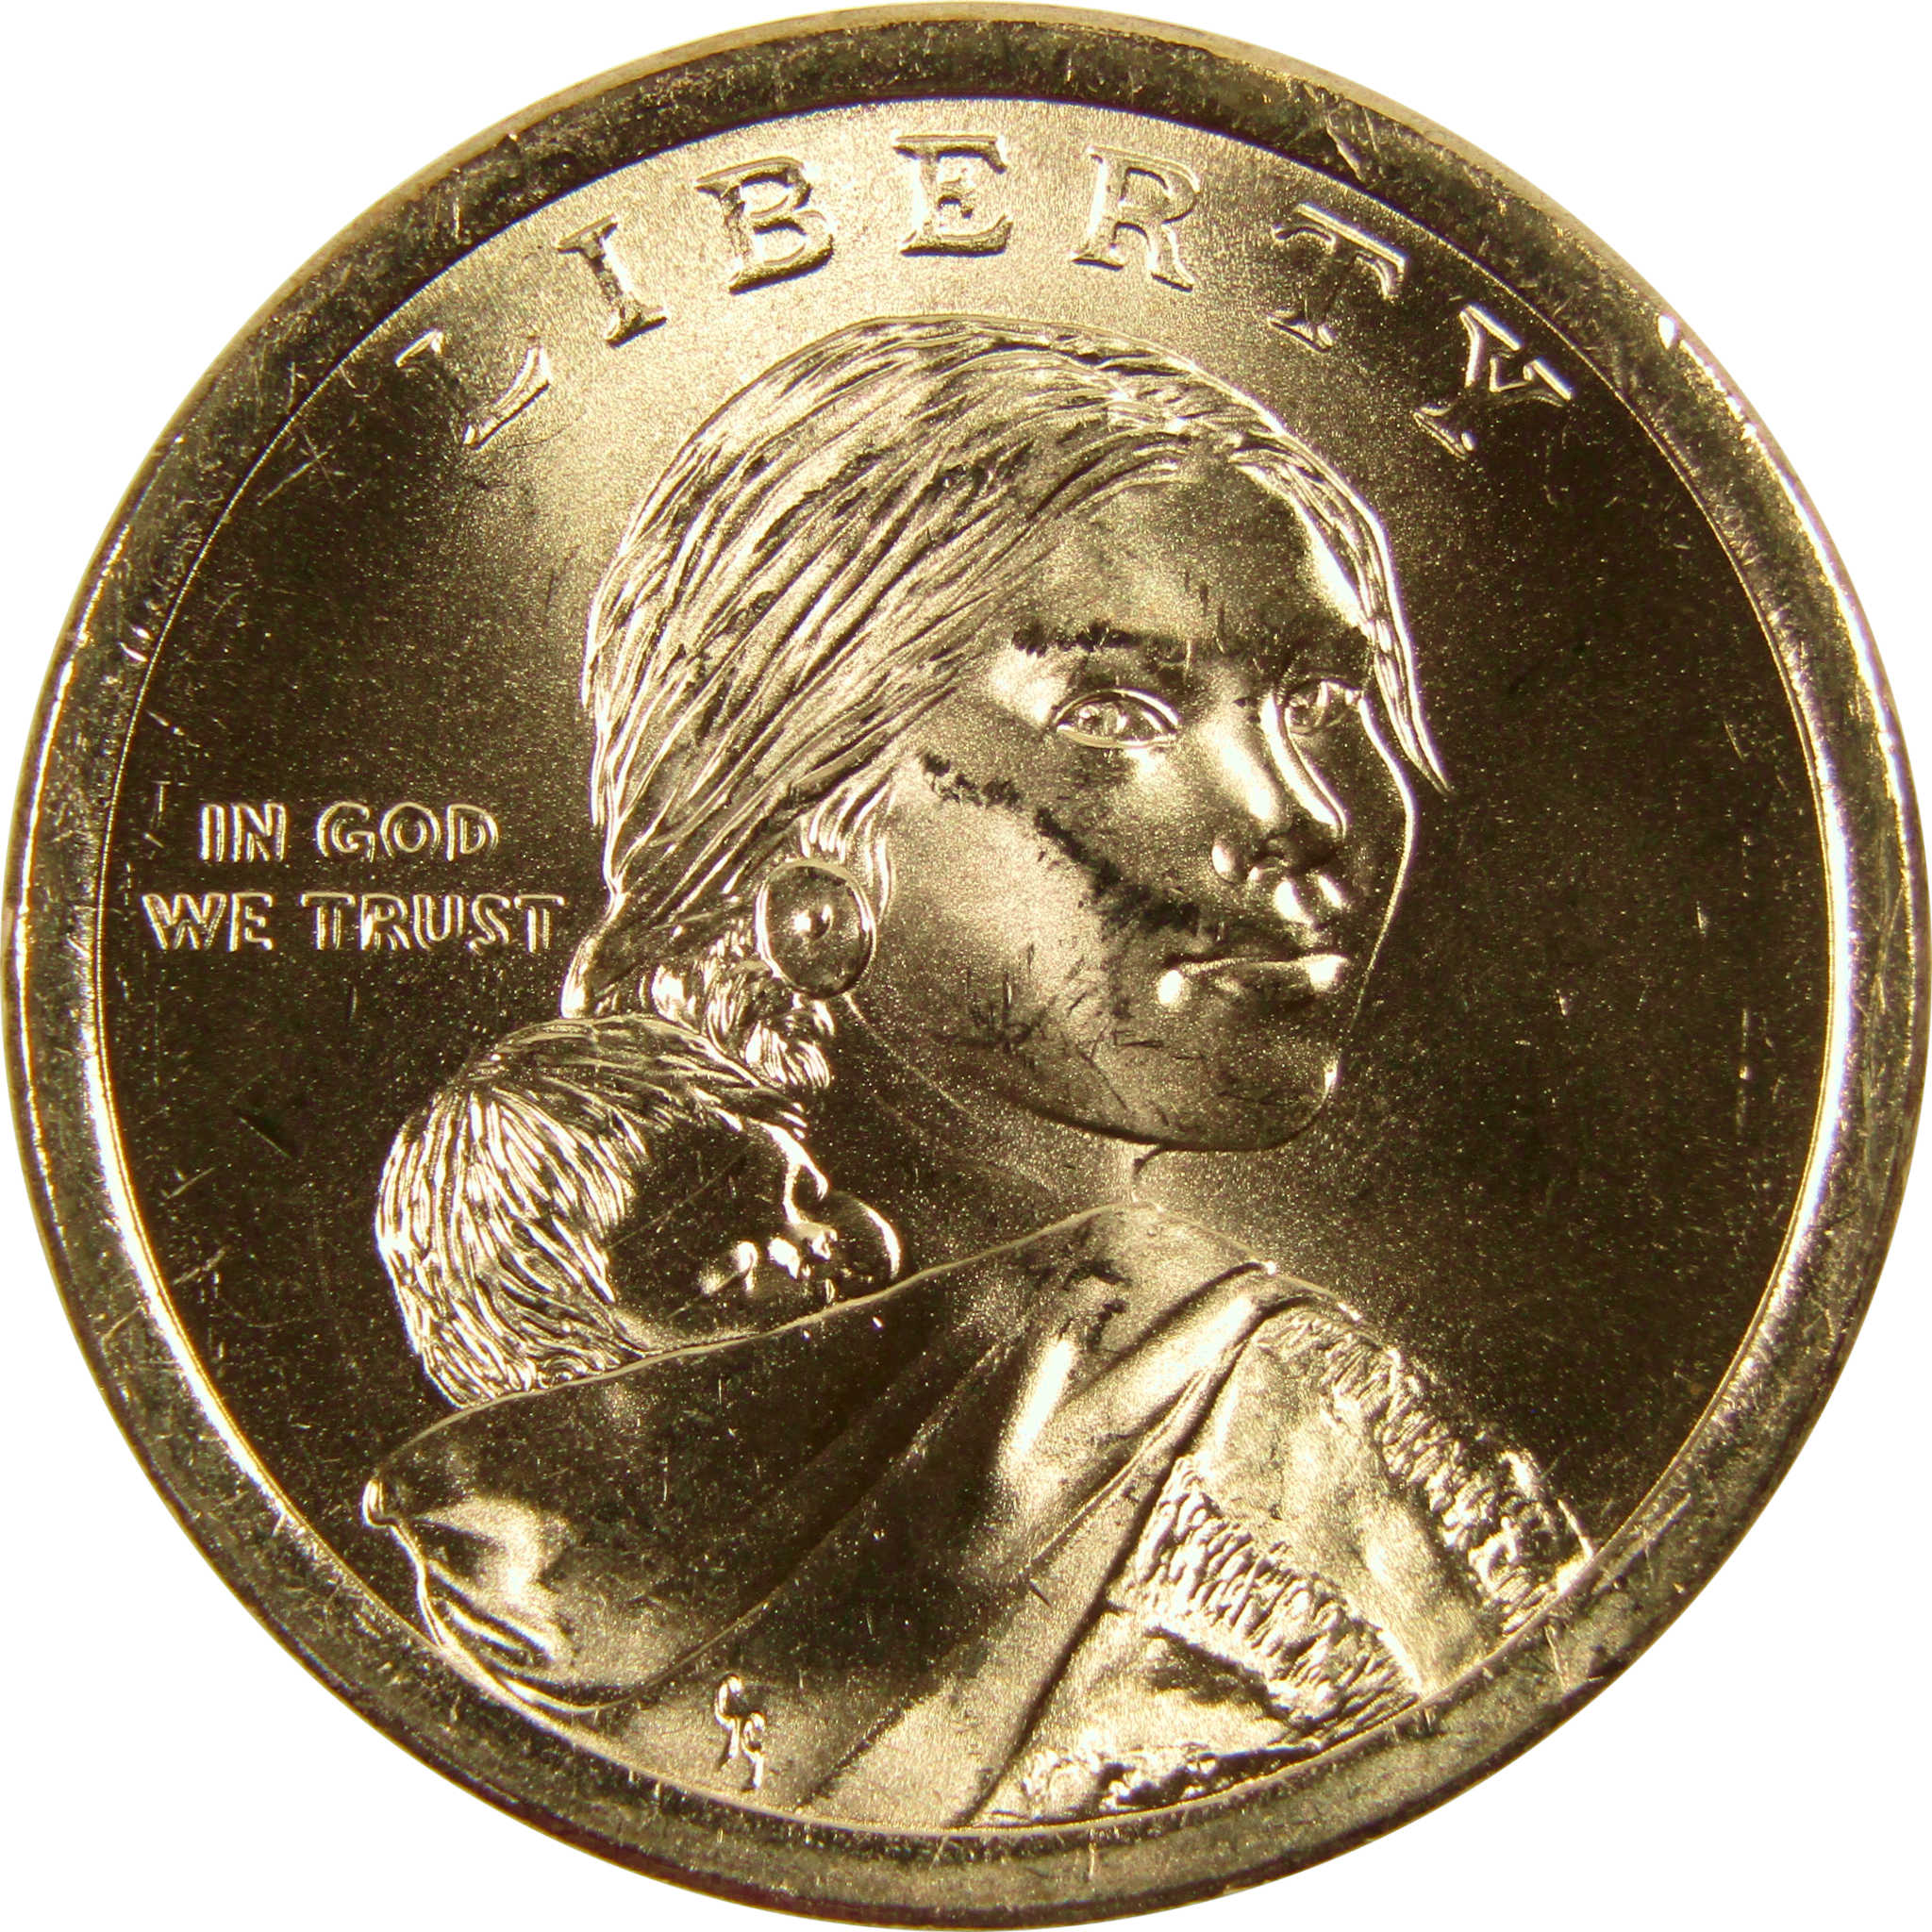 2018 P Jim Thorpe Native American Dollar BU Uncirculated $1 Coin